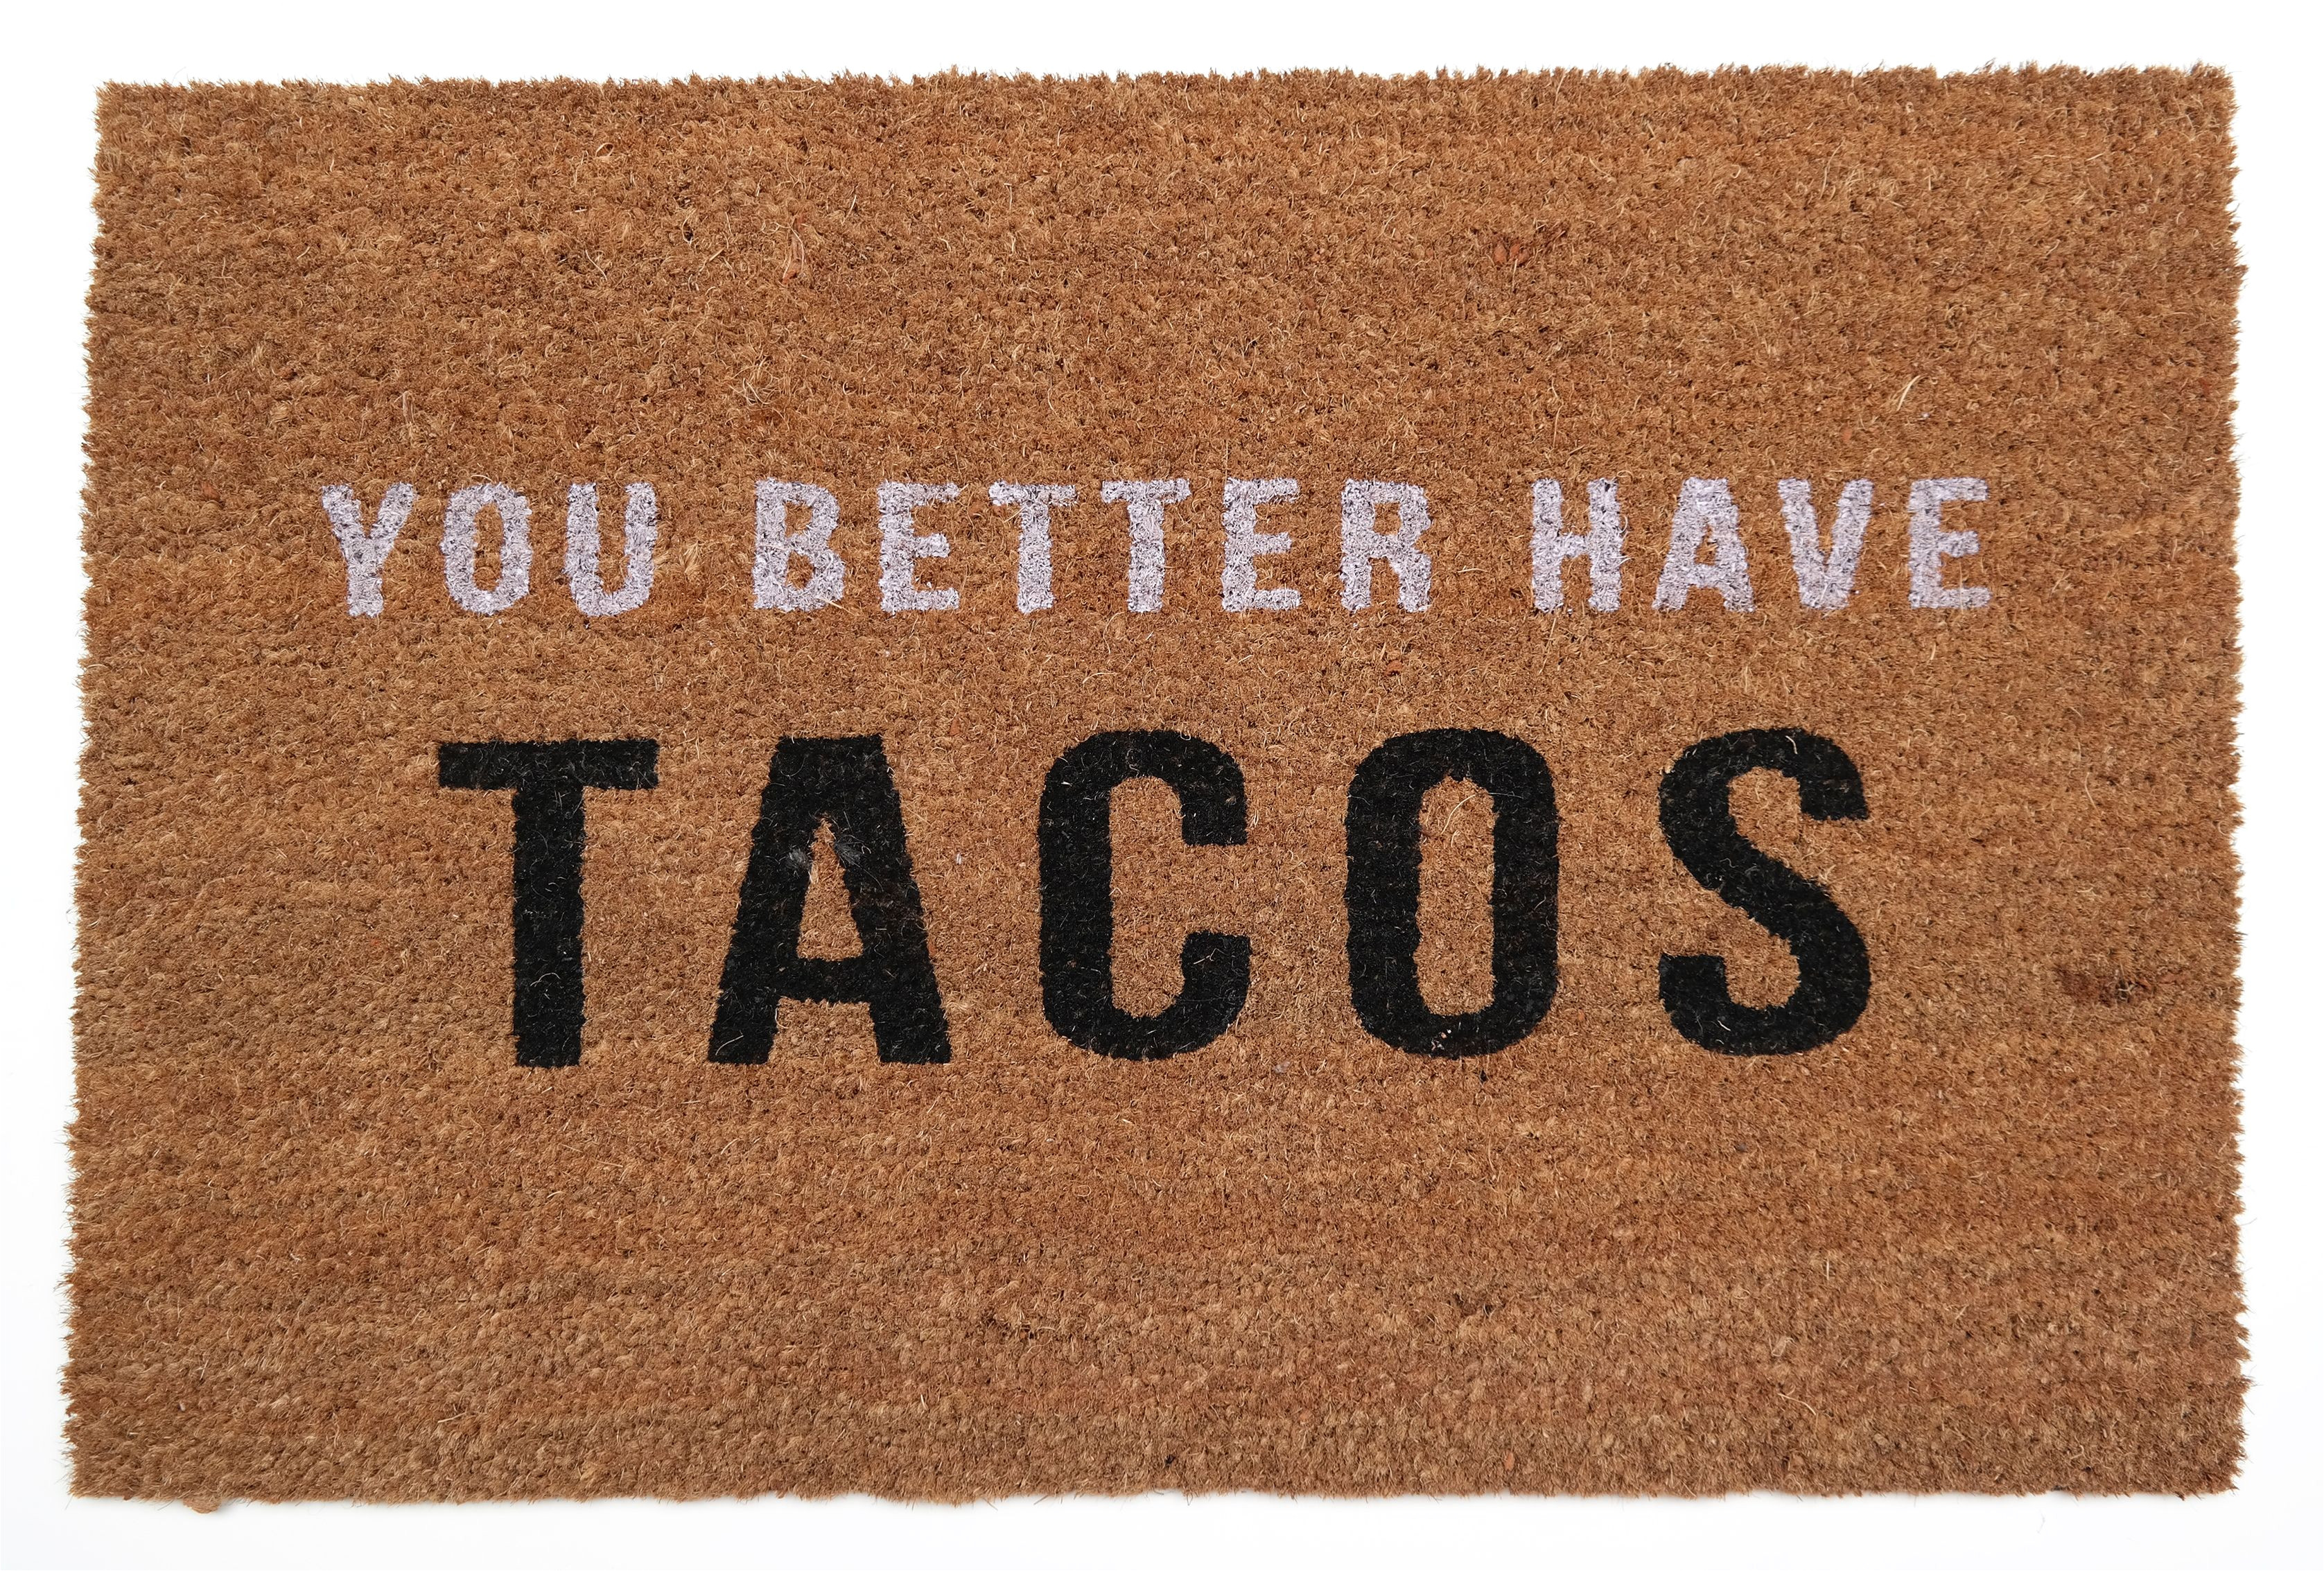 You Better Have Tacos Doormat You Better Have Tacos Doormat Food Delish Pinterest